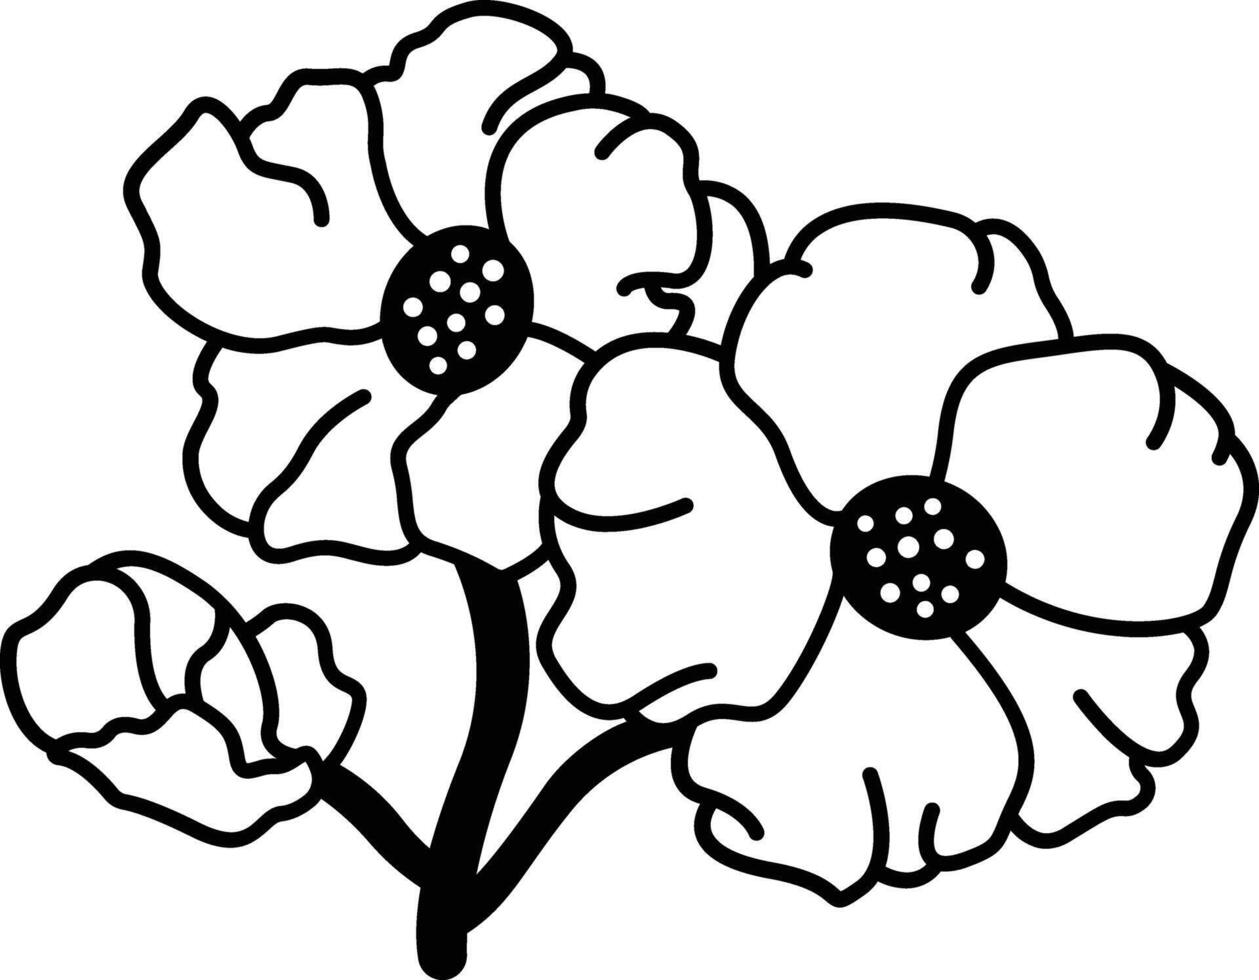 Nasturtium flower glyph and line vector illustration